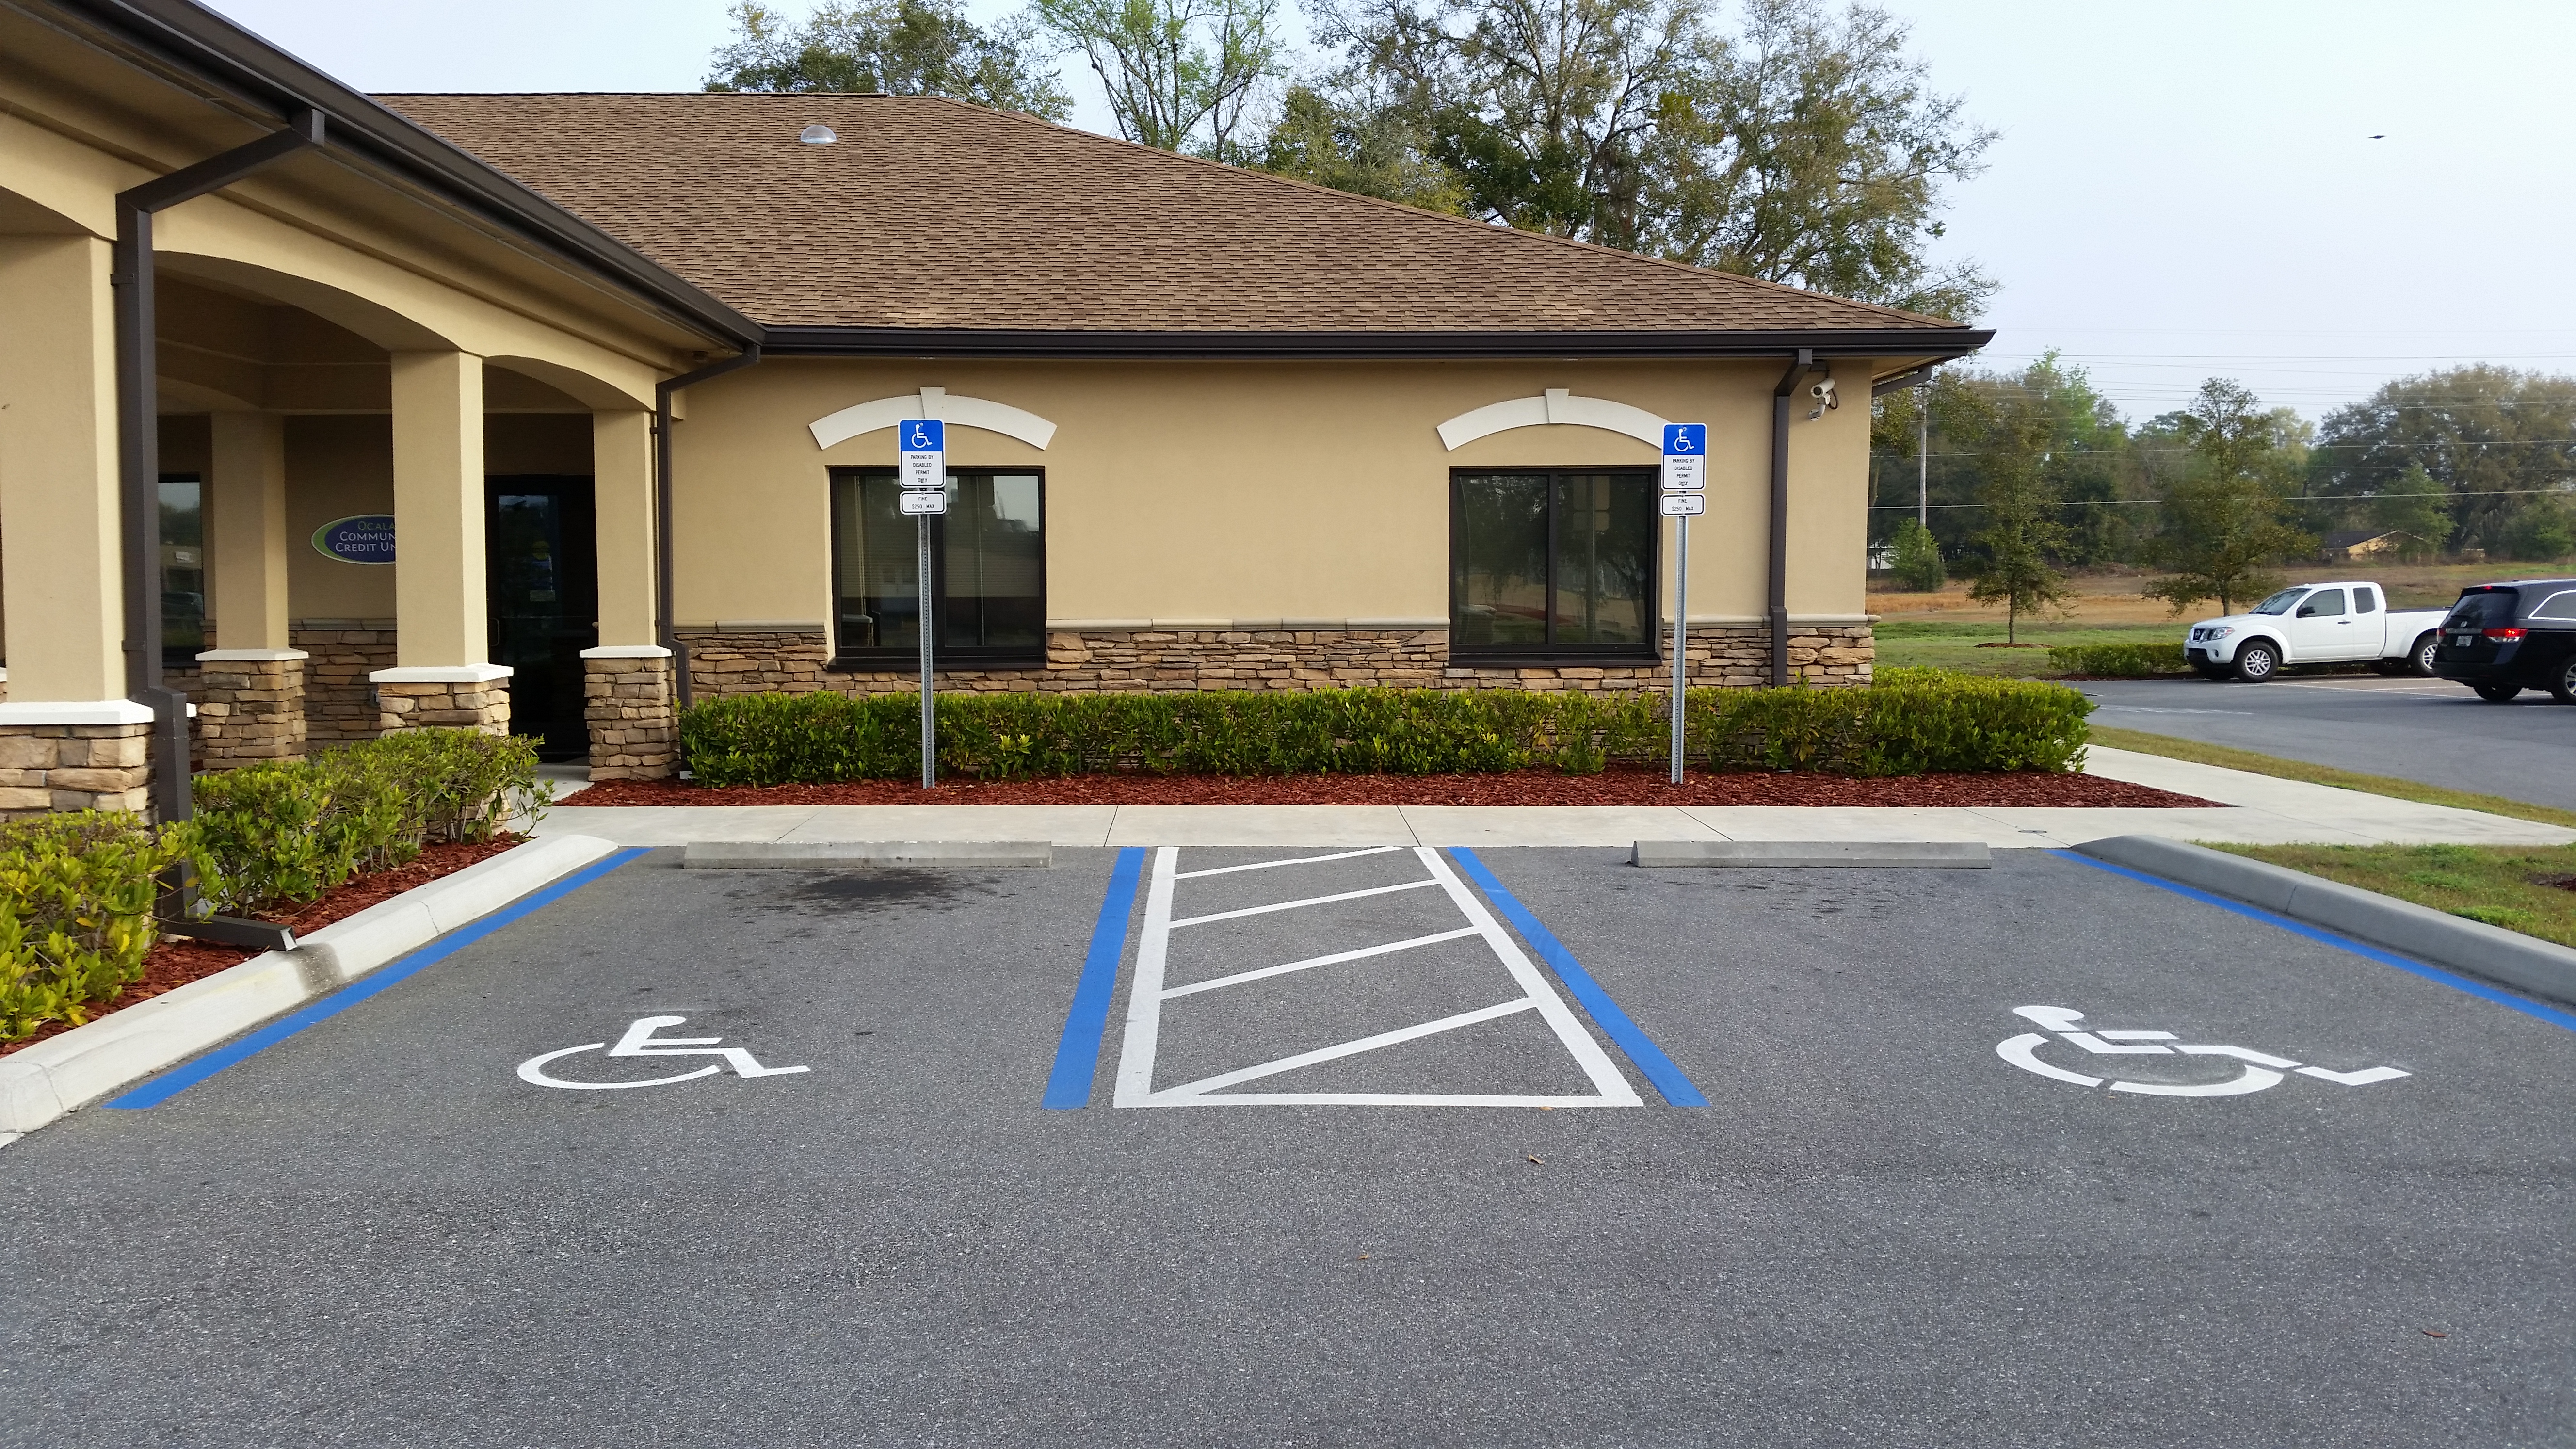 03-03-2015 New Handicap Parking Space